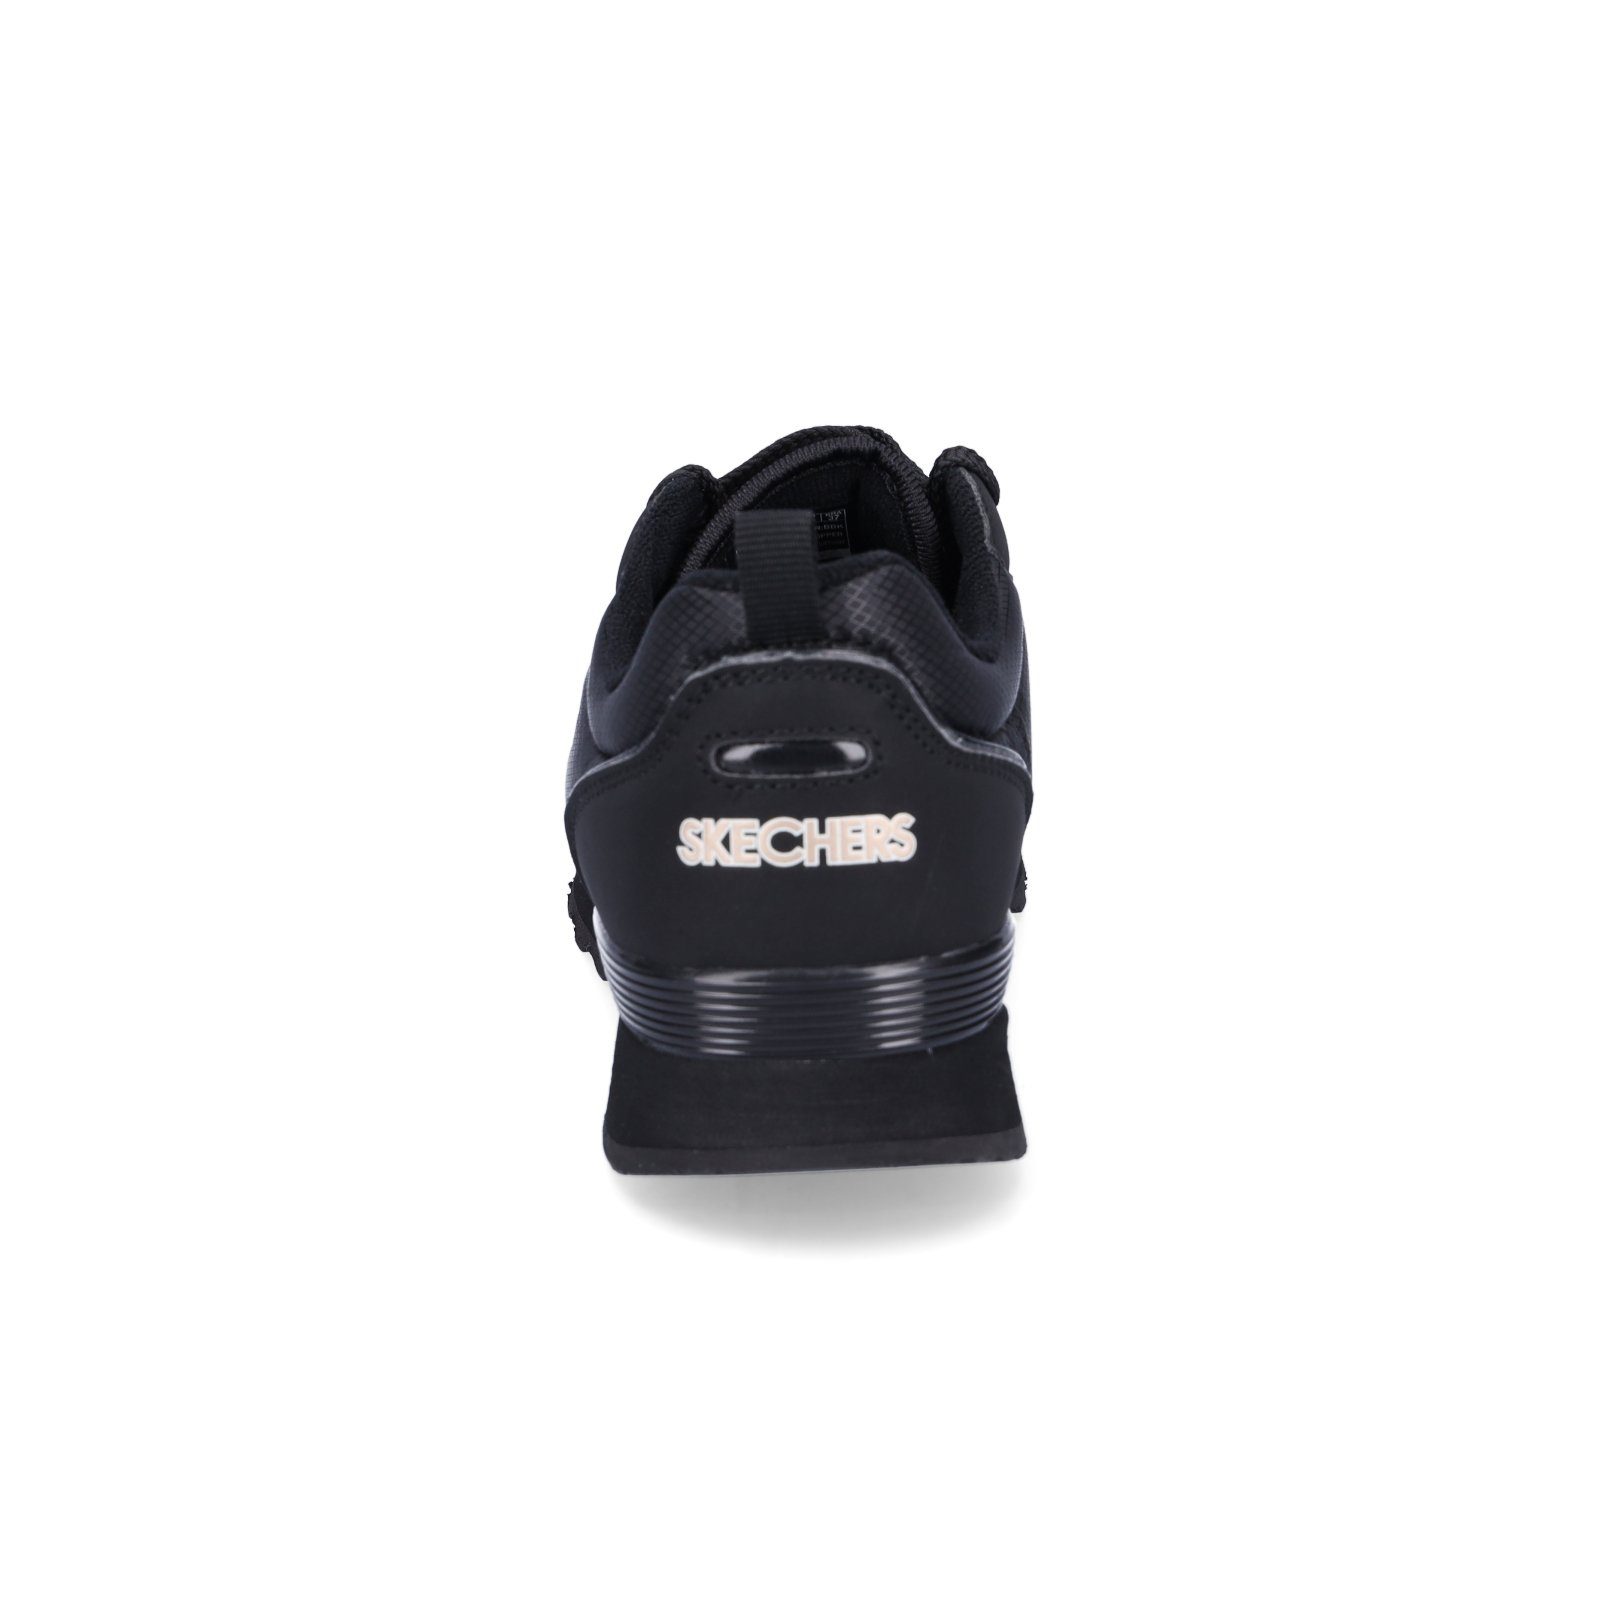 OG Damen Skechers black/black schwarz Sneaker Skechers 85-2KEWL Sneaker